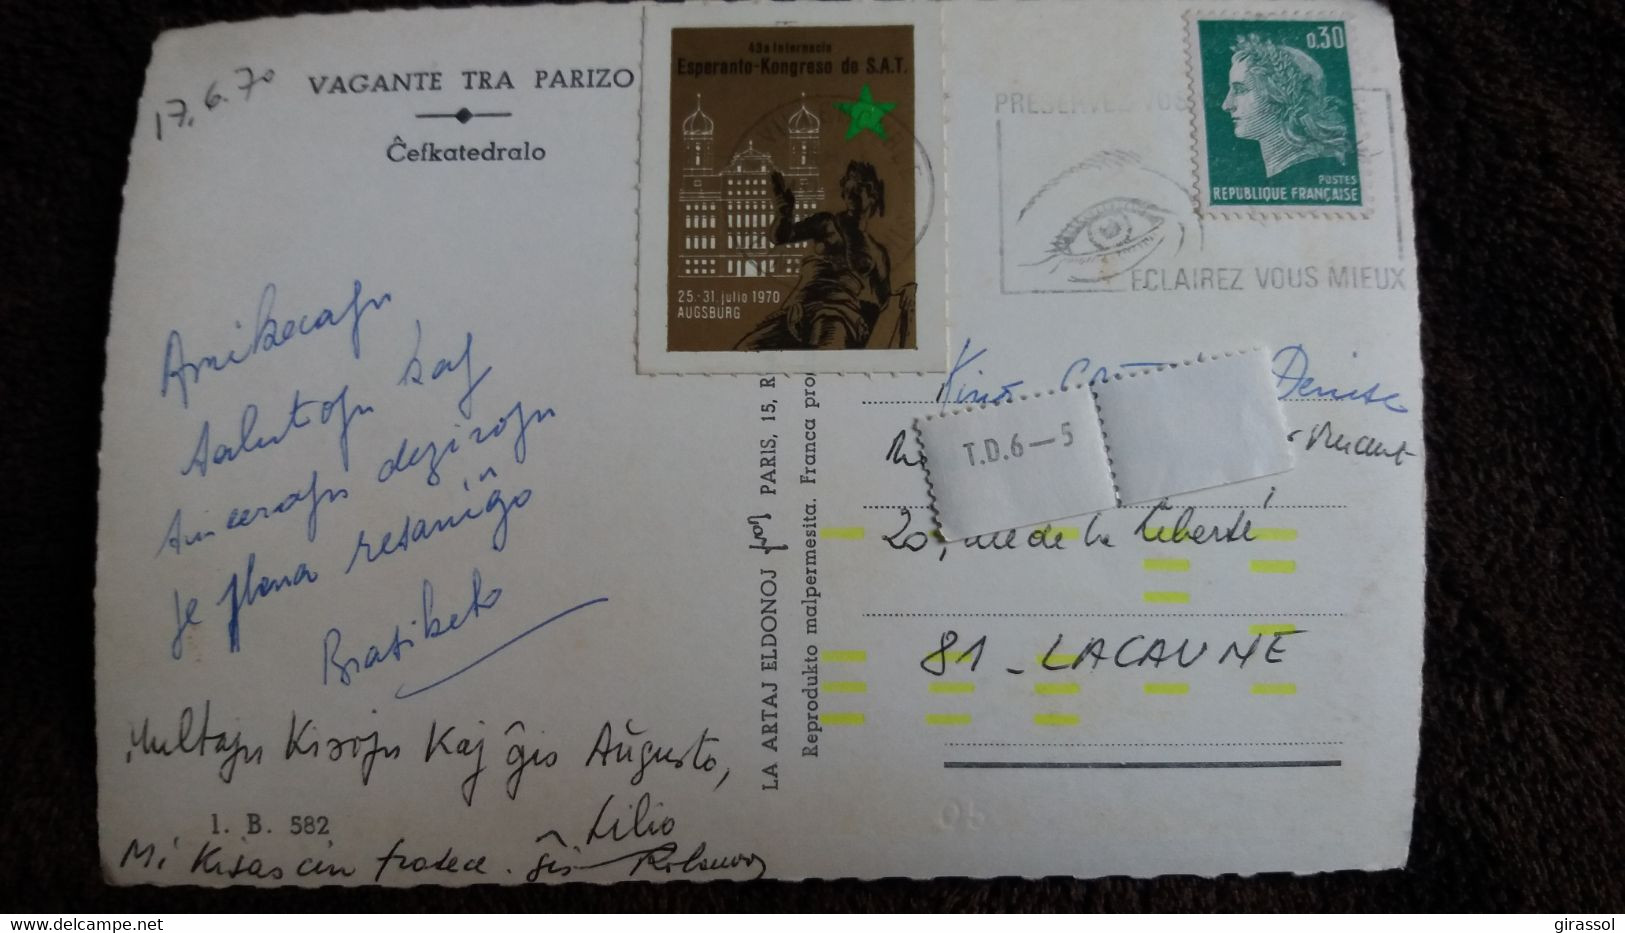 CPM ESPERANTO PARIS NOTRE DAME CATHEDRALE PARIZO  CEFKATEDRALO VAGANTE TRA PARIZO 1970 YVON - Esperanto